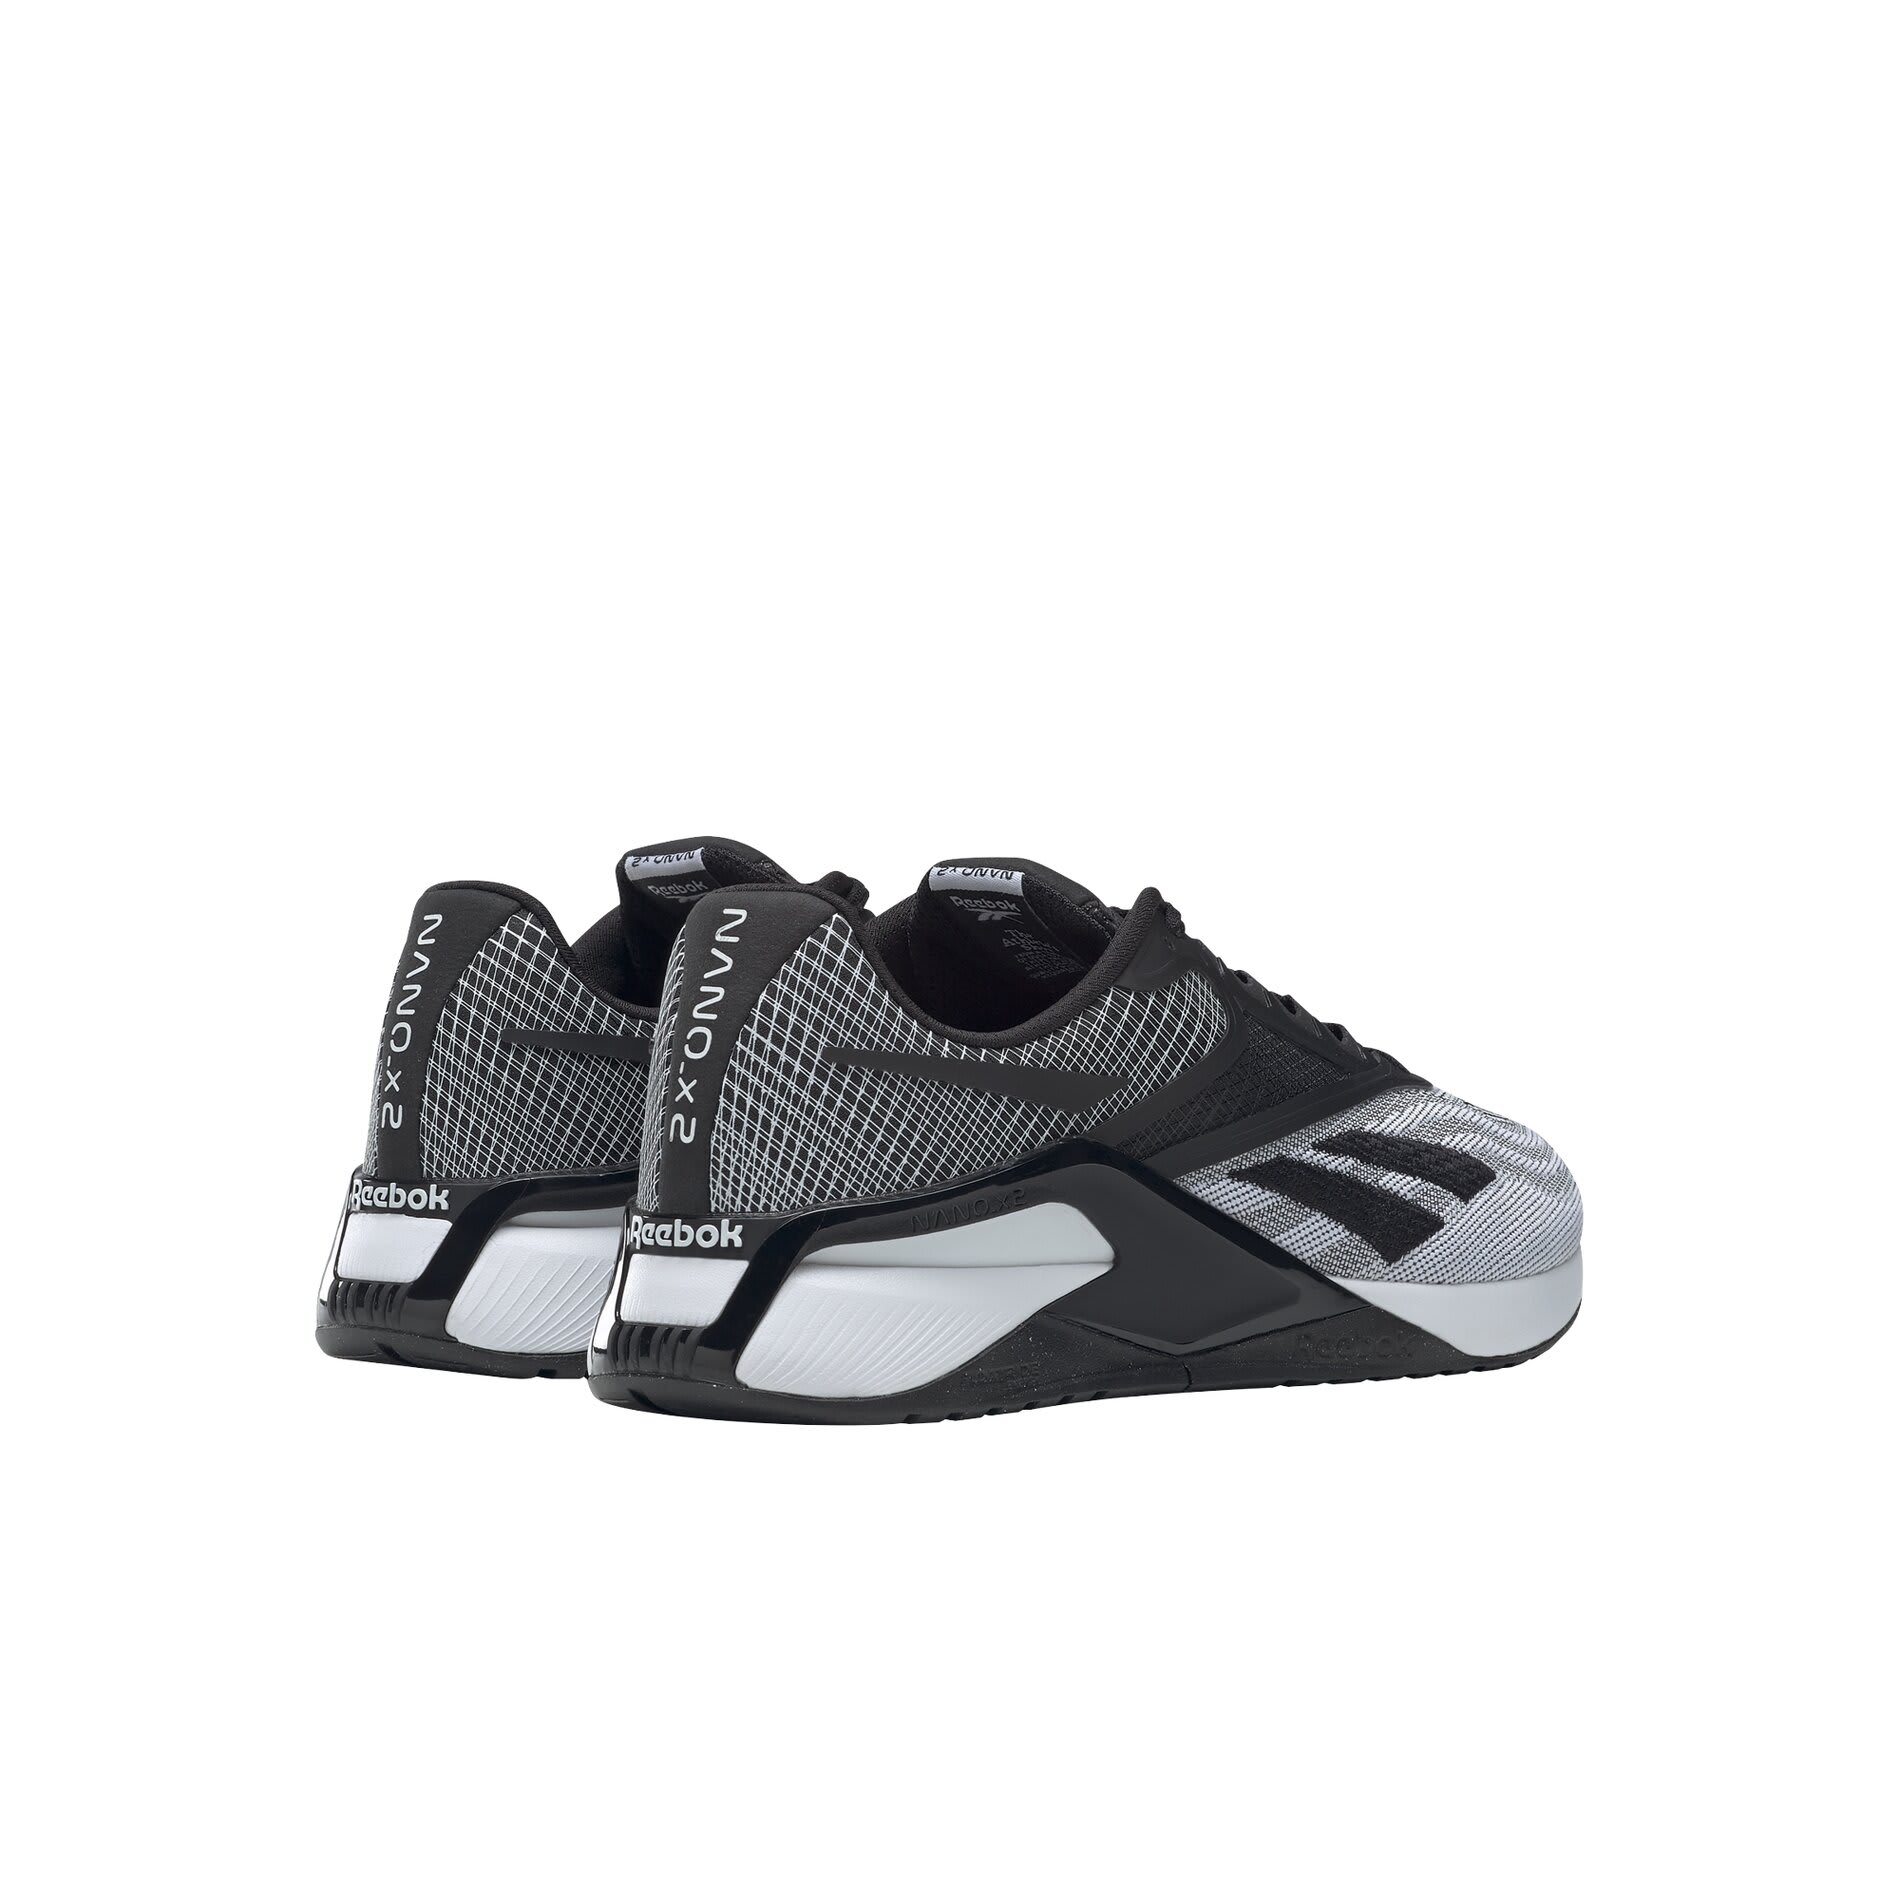 Reebok Men's Nano X2 Cross Training Shoes | Sportsmans Warehouse